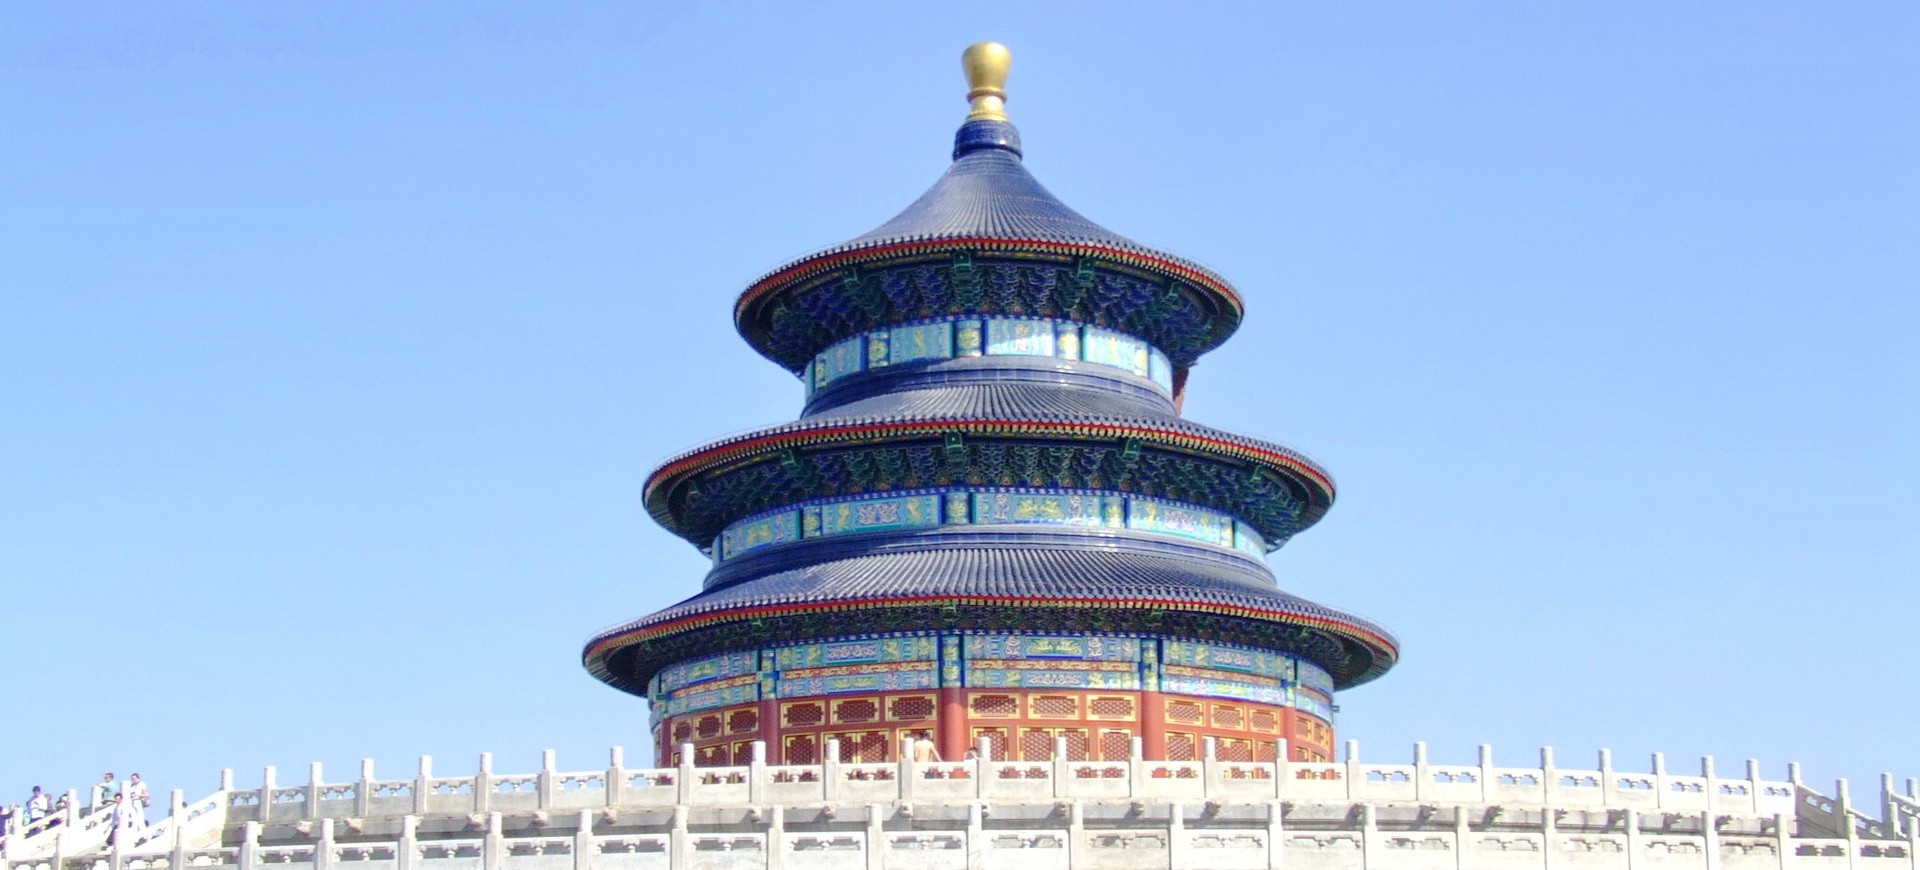 Chine Pékin Beijing Temple du Ciel